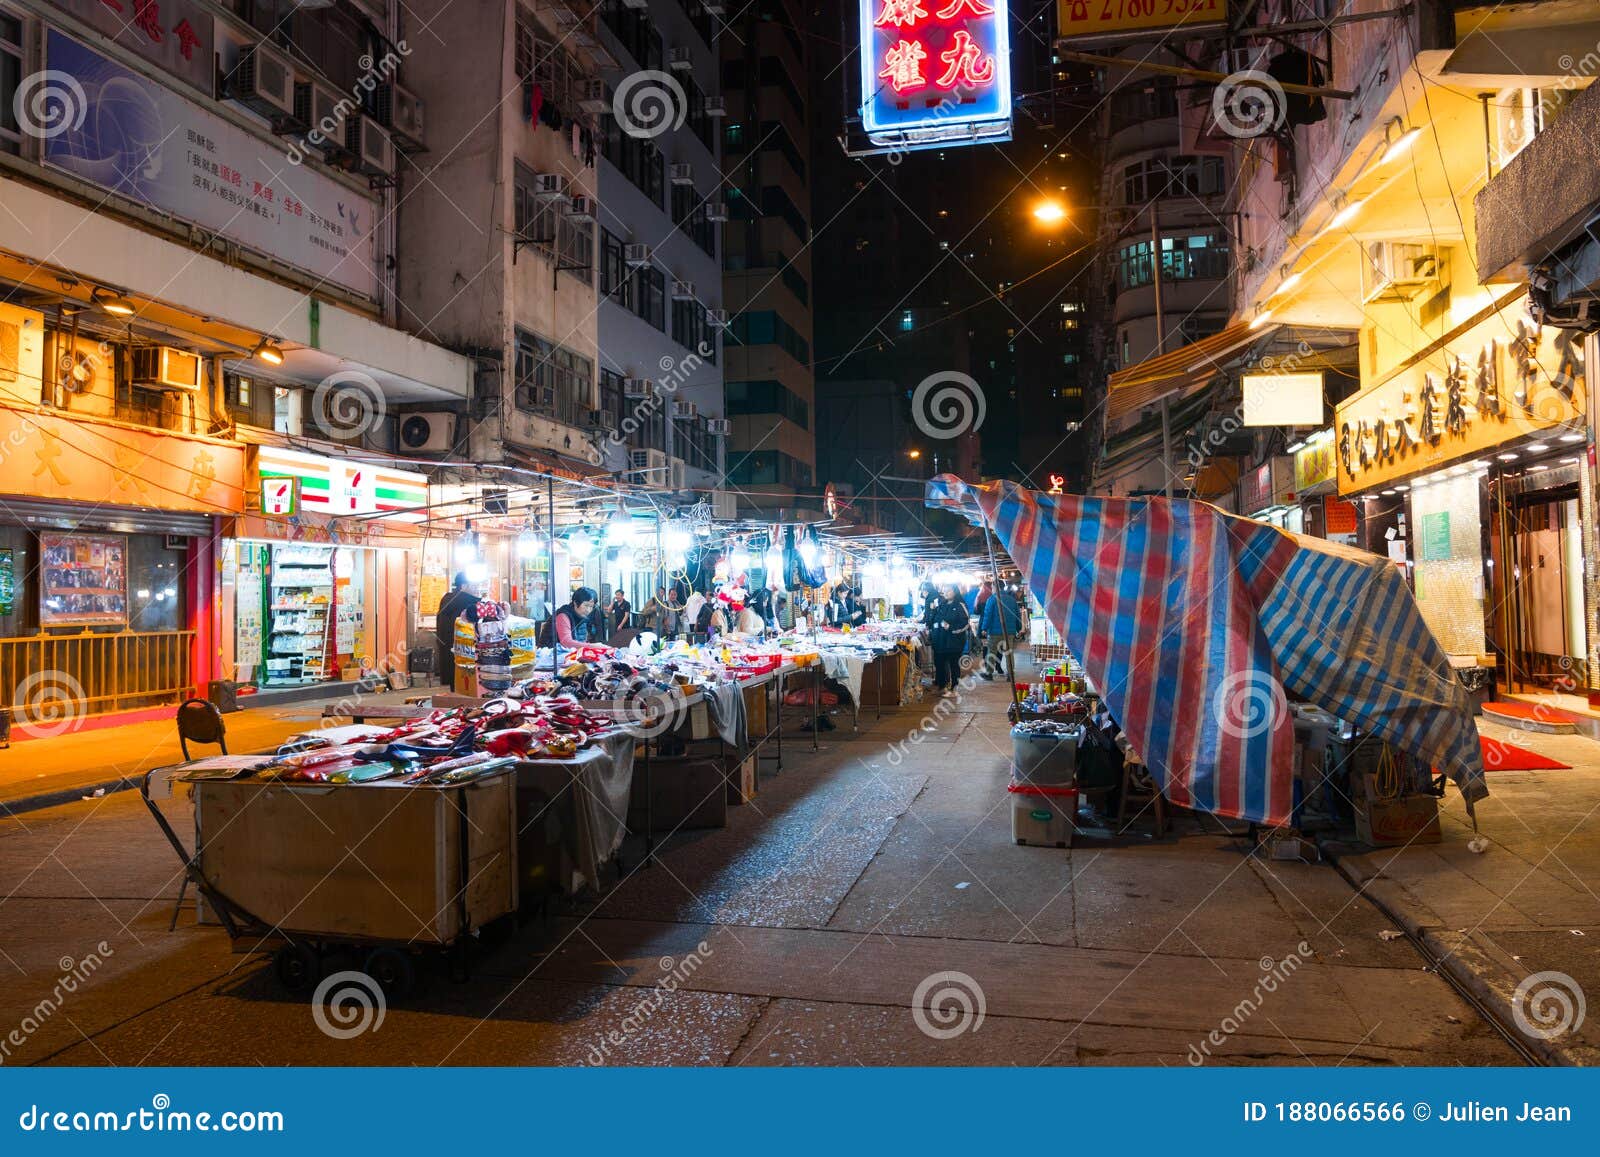 Señora Iluminar católico Temple Street Night Market, Jordan & Yau Ma Tei, Kowloon, Hong Kong  Editorial Photo - Image of editorial, leisure: 188066566